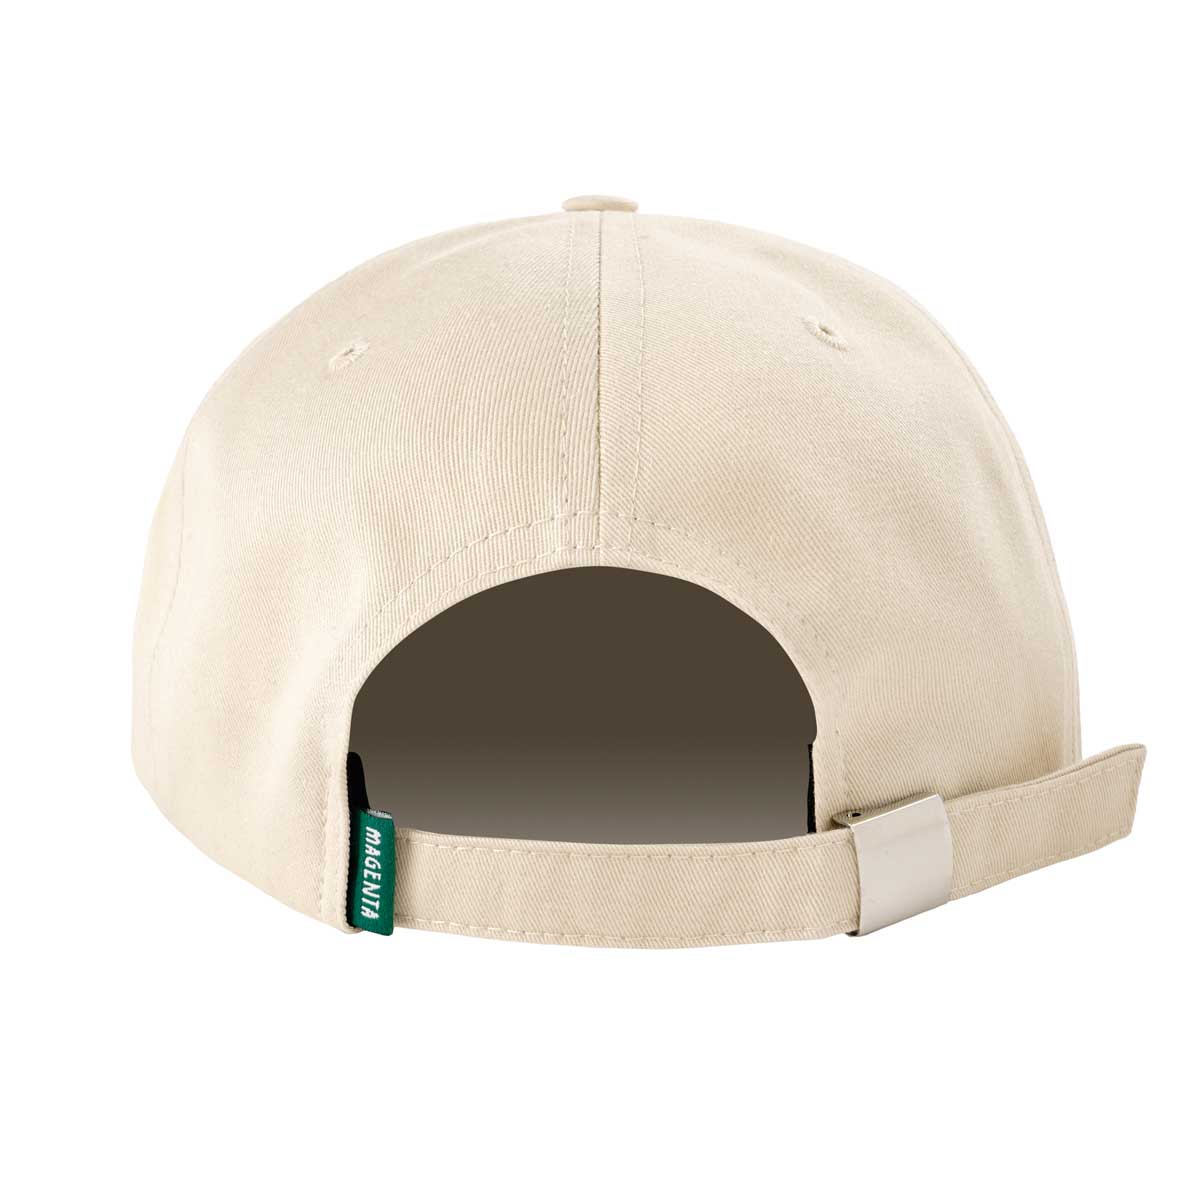 Magenta PWS 6P Hat, beige - Tiki Room Skateboards - 5